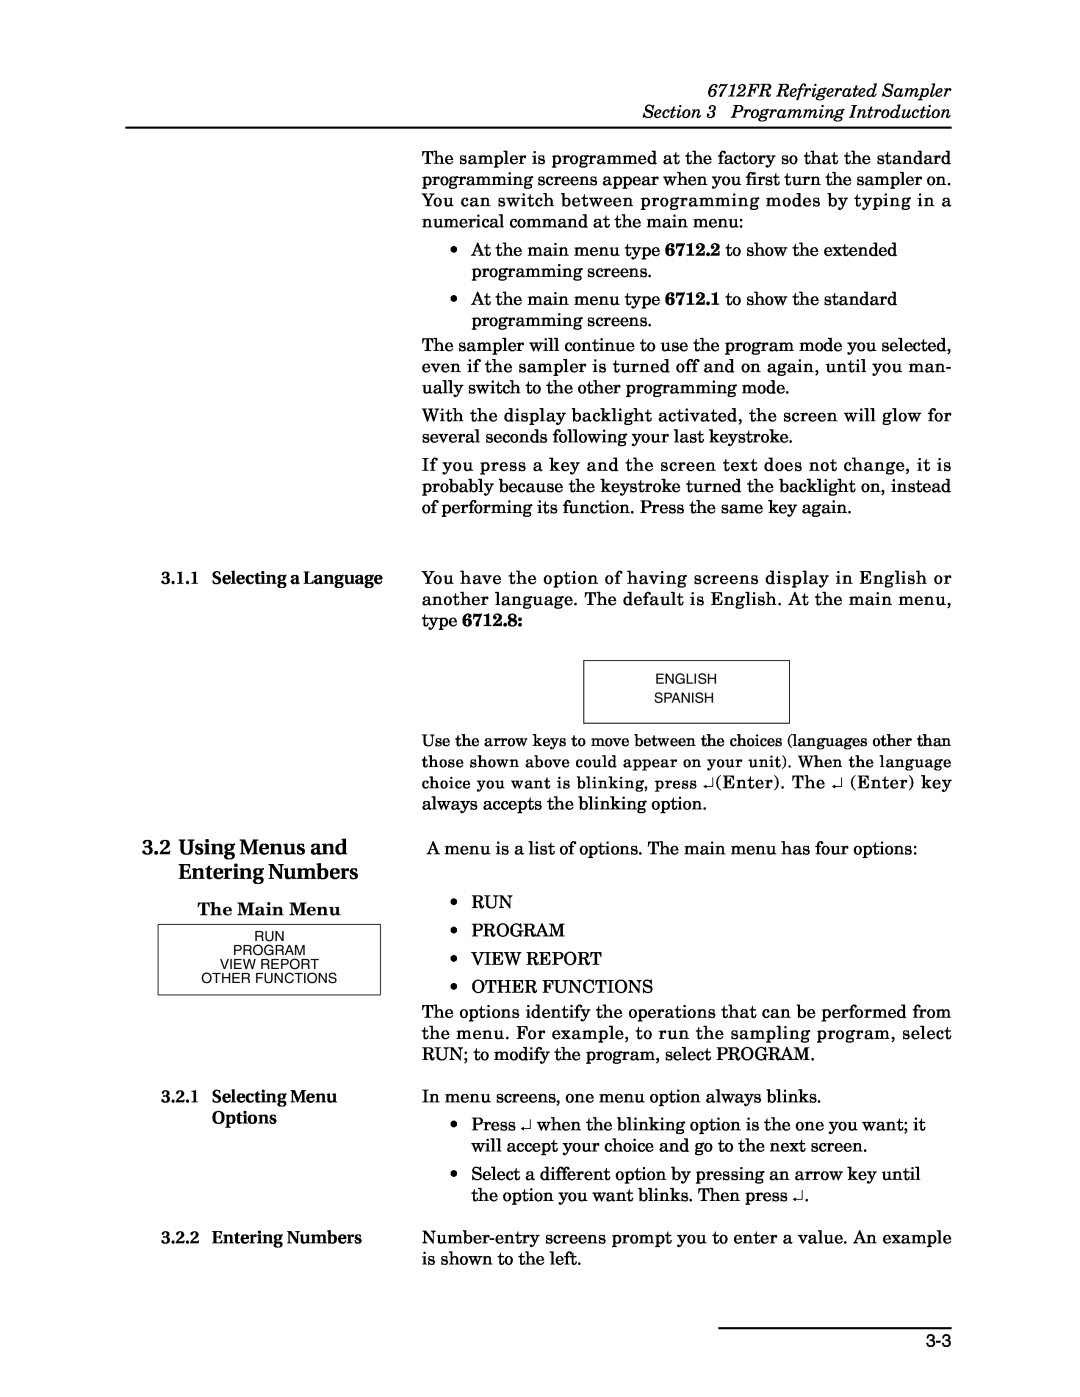 Teledyne manual Using Menus and Entering Numbers, 6712FR Refrigerated Sampler Programming Introduction, The Main Menu 